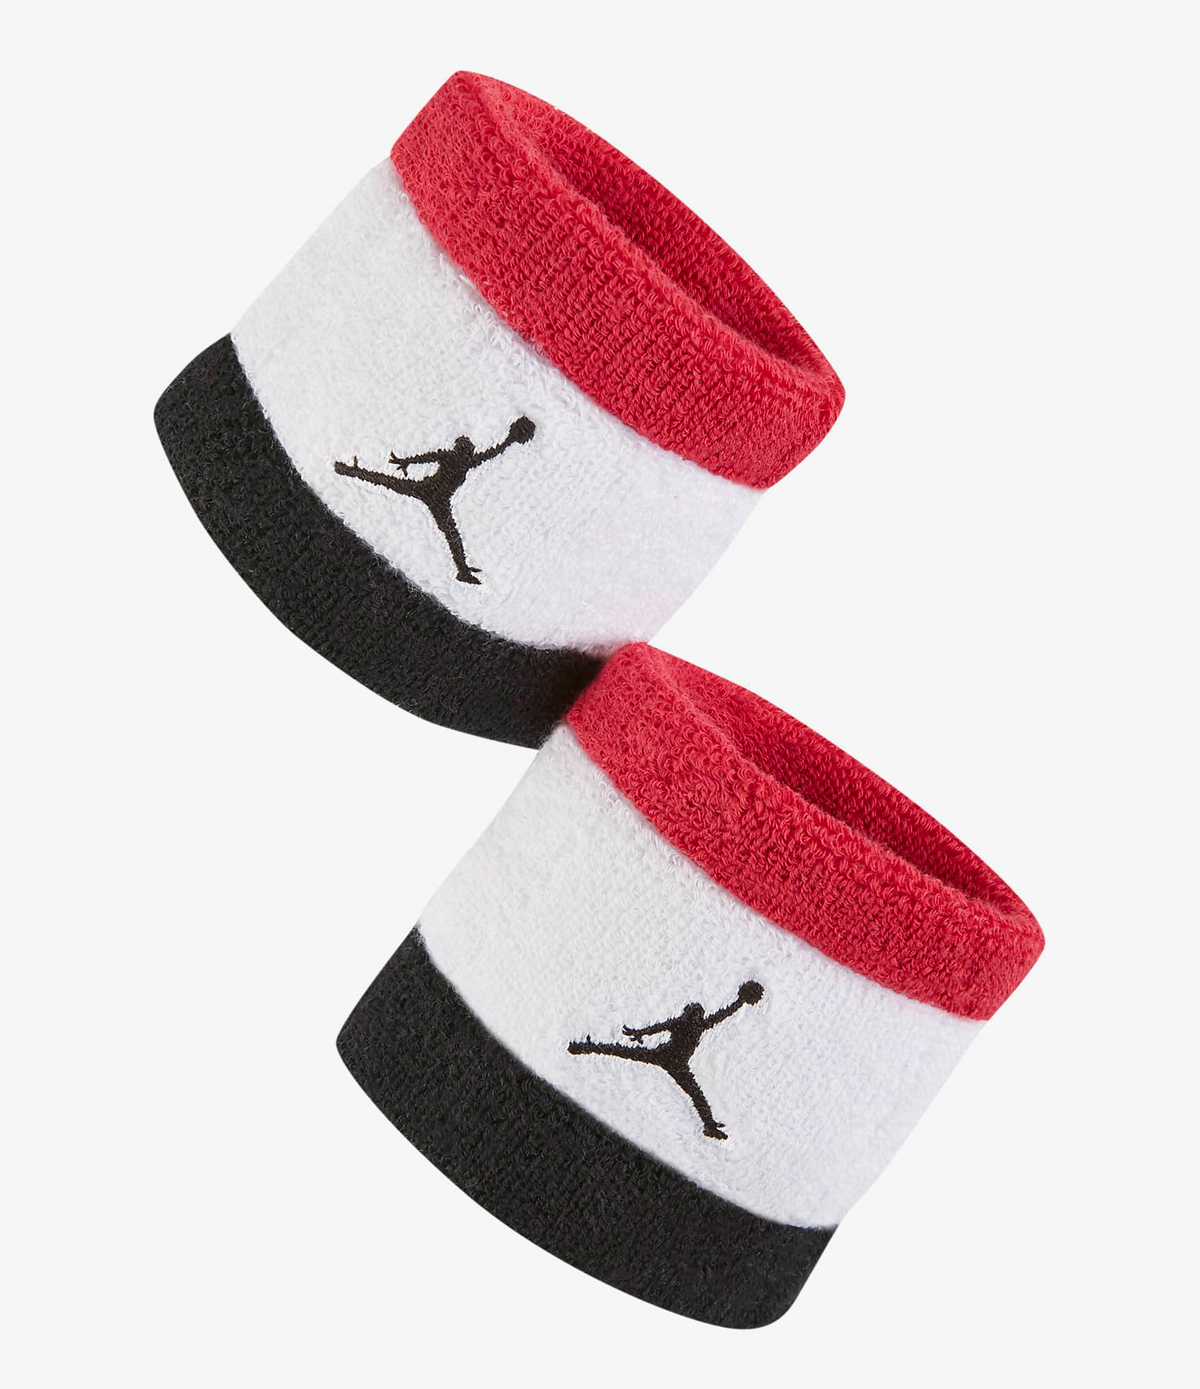 Jordan-Terry-Wristbands-Gym-Red-Black-White